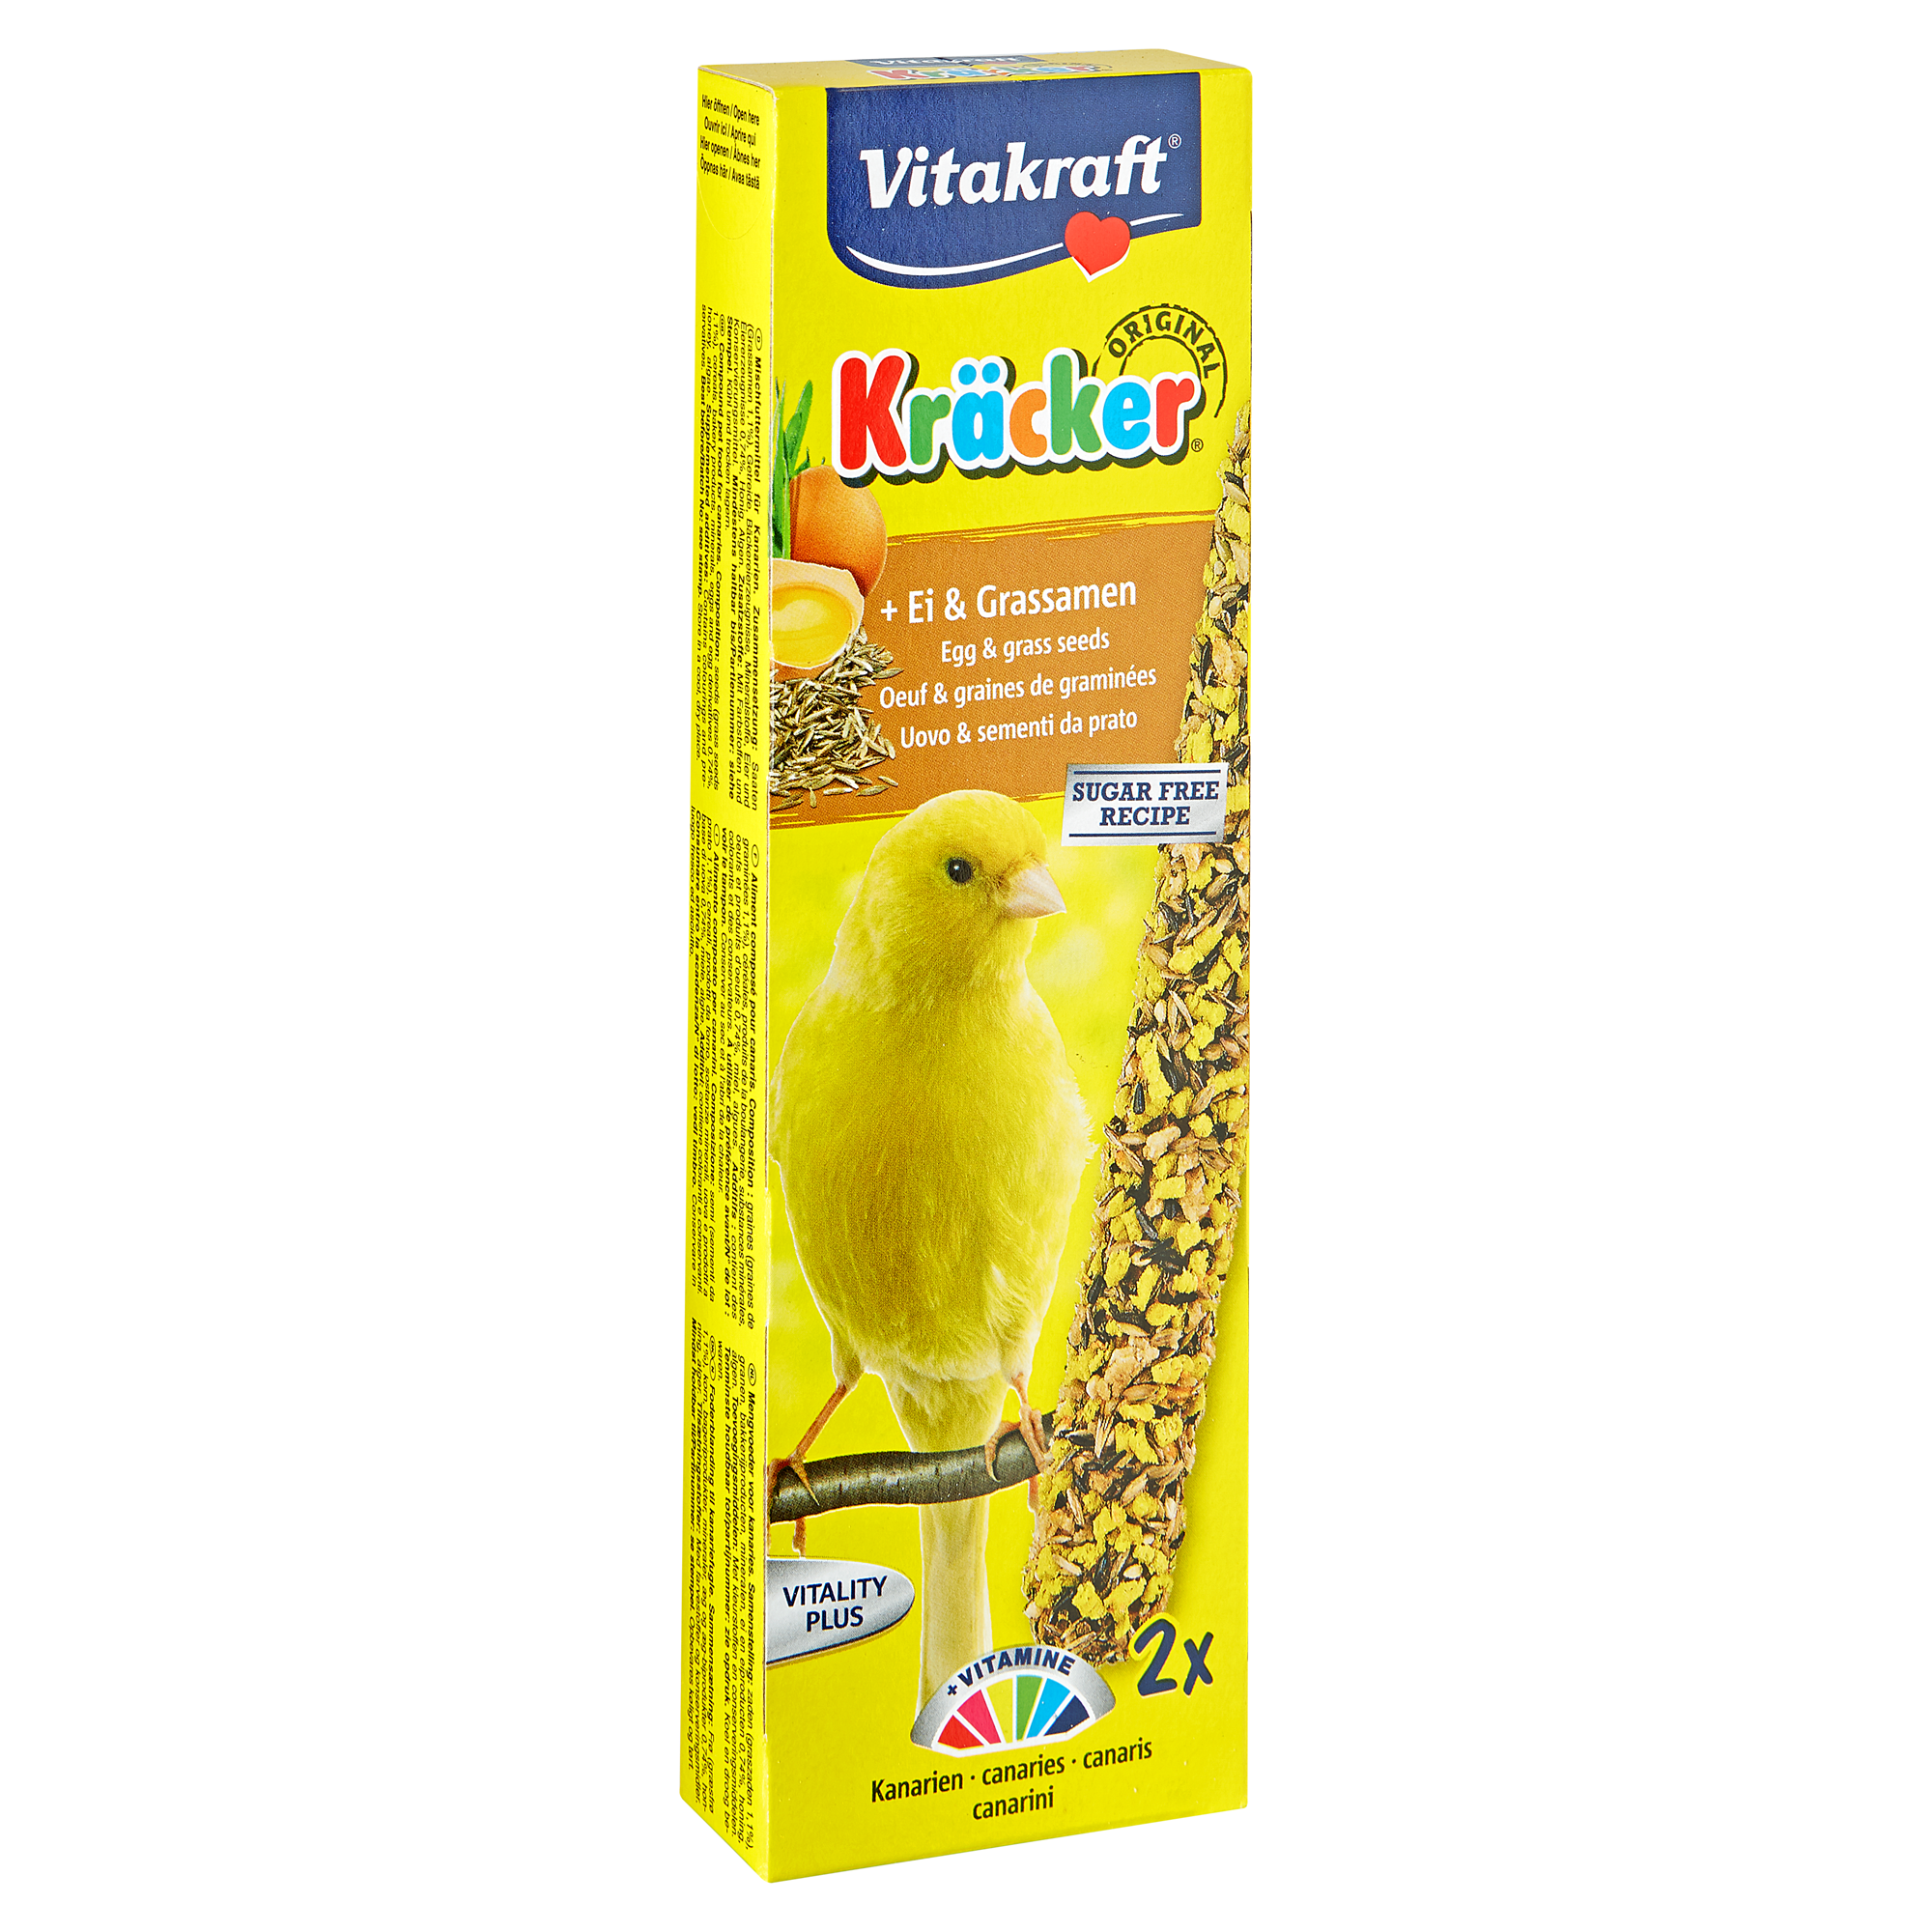 Kanarienfutter "Kräcker® Original" Ei und Grassamen 2 Stück + product picture